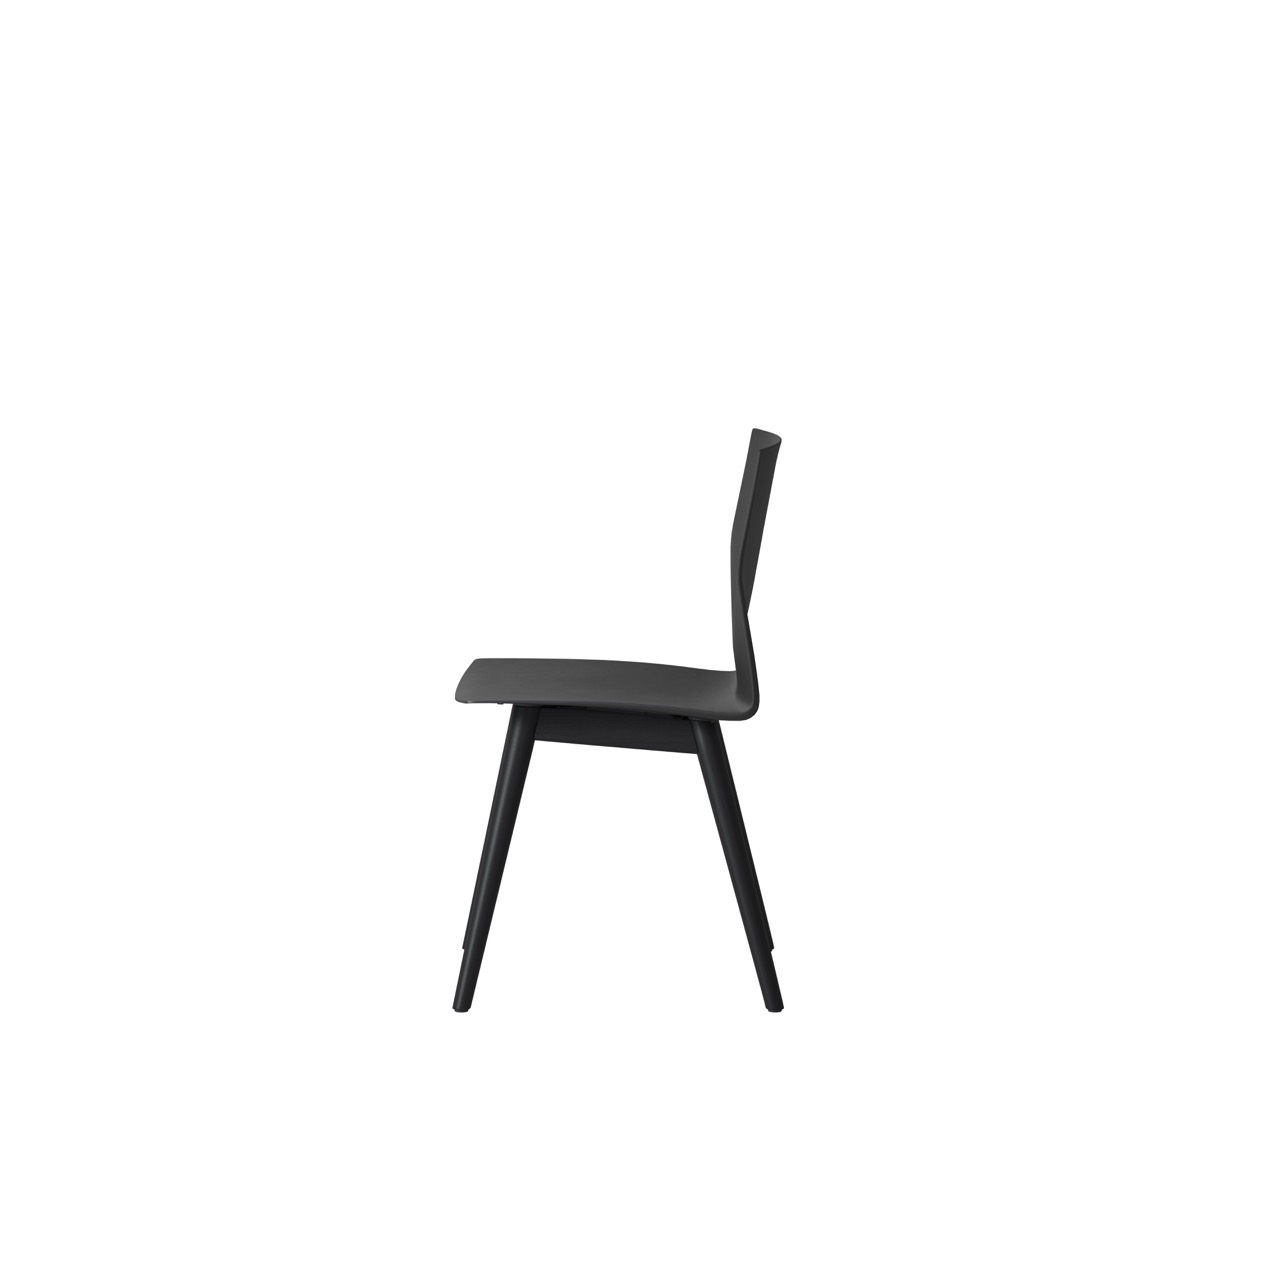 OCEE&FOUR – Chairs – FourCast 2 Four – Plastic shell - Black oak frame - Packshot Image 3 Large